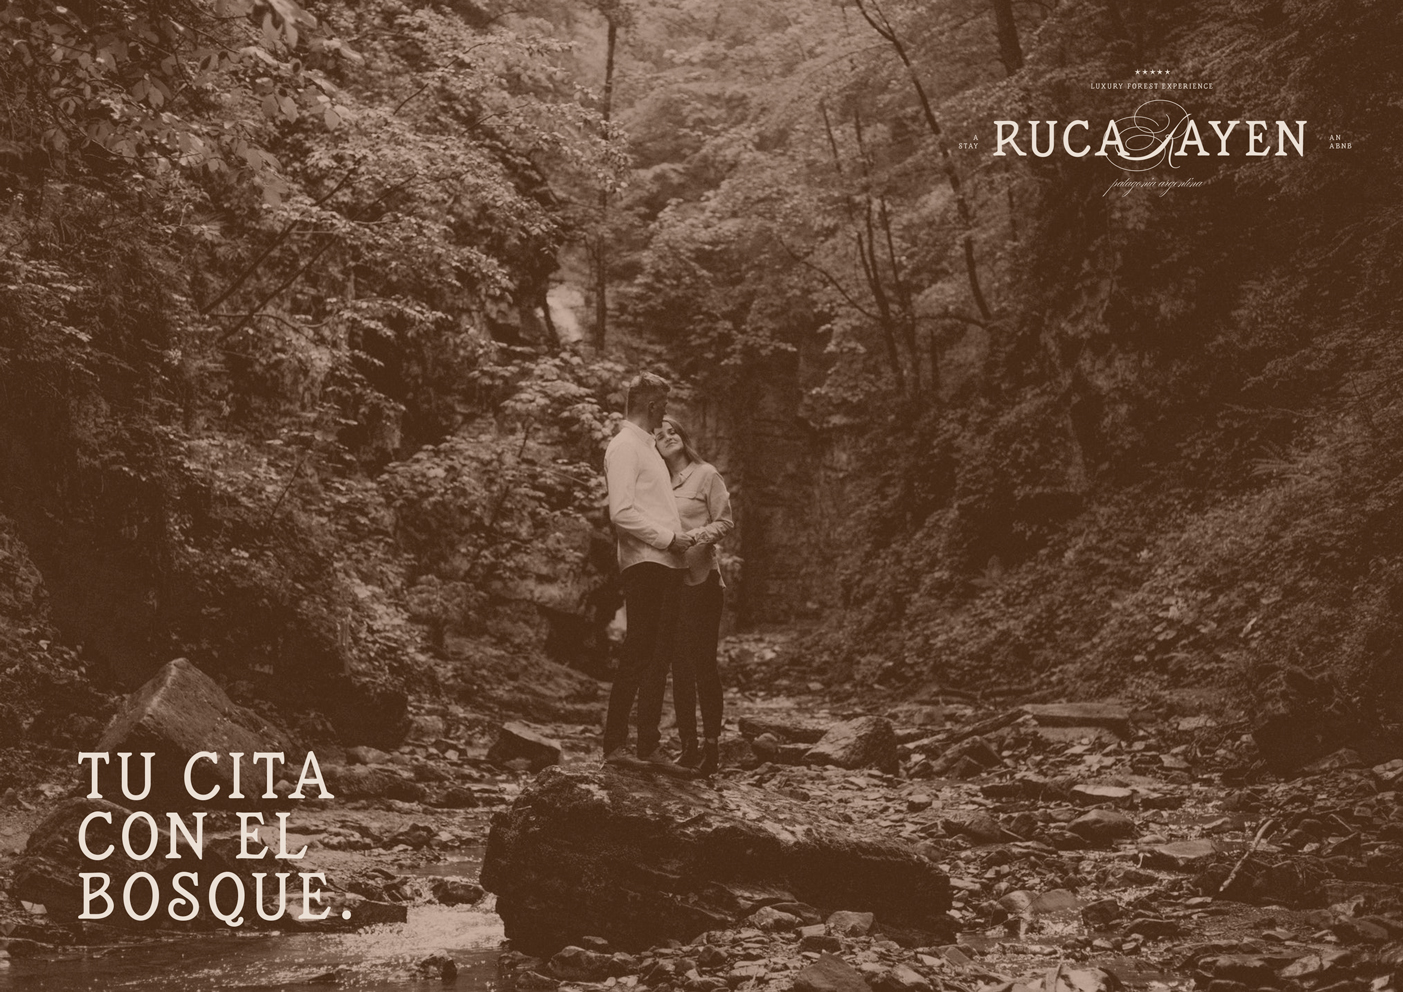 Ruca Rayen – Casual Luxury Rental in the Forest